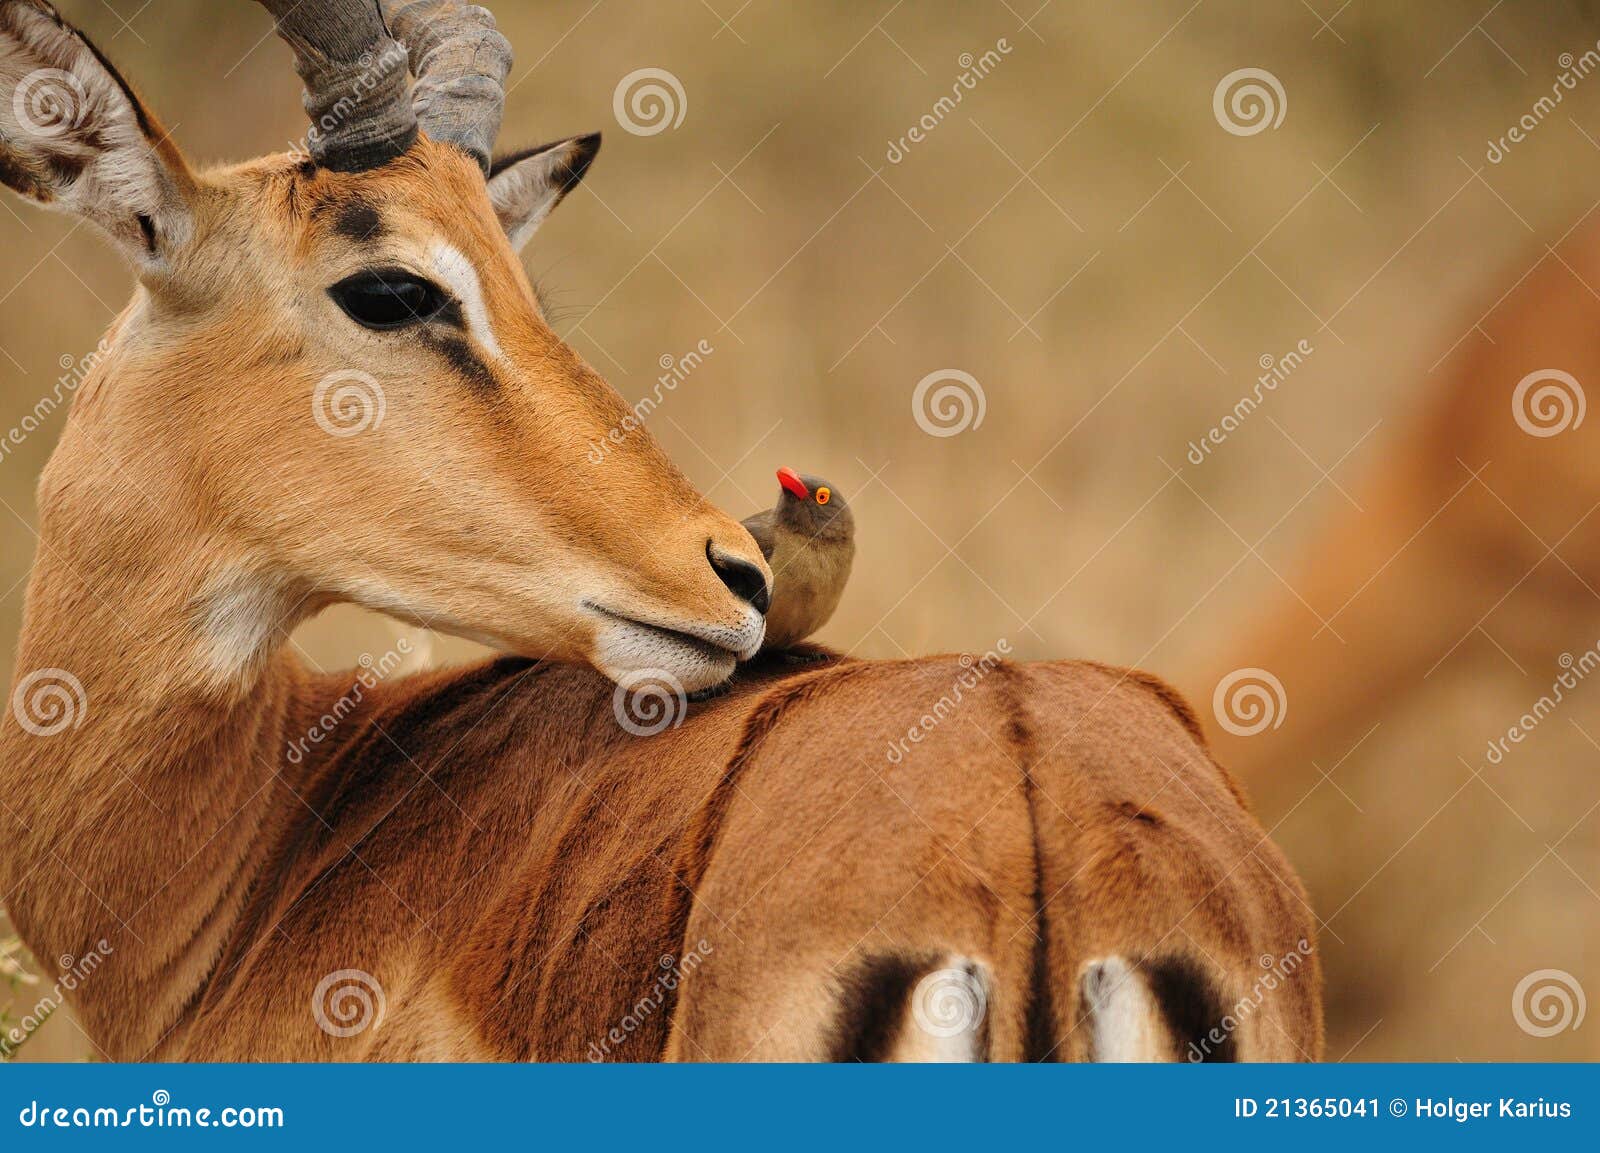 impala antelope and oxpecker